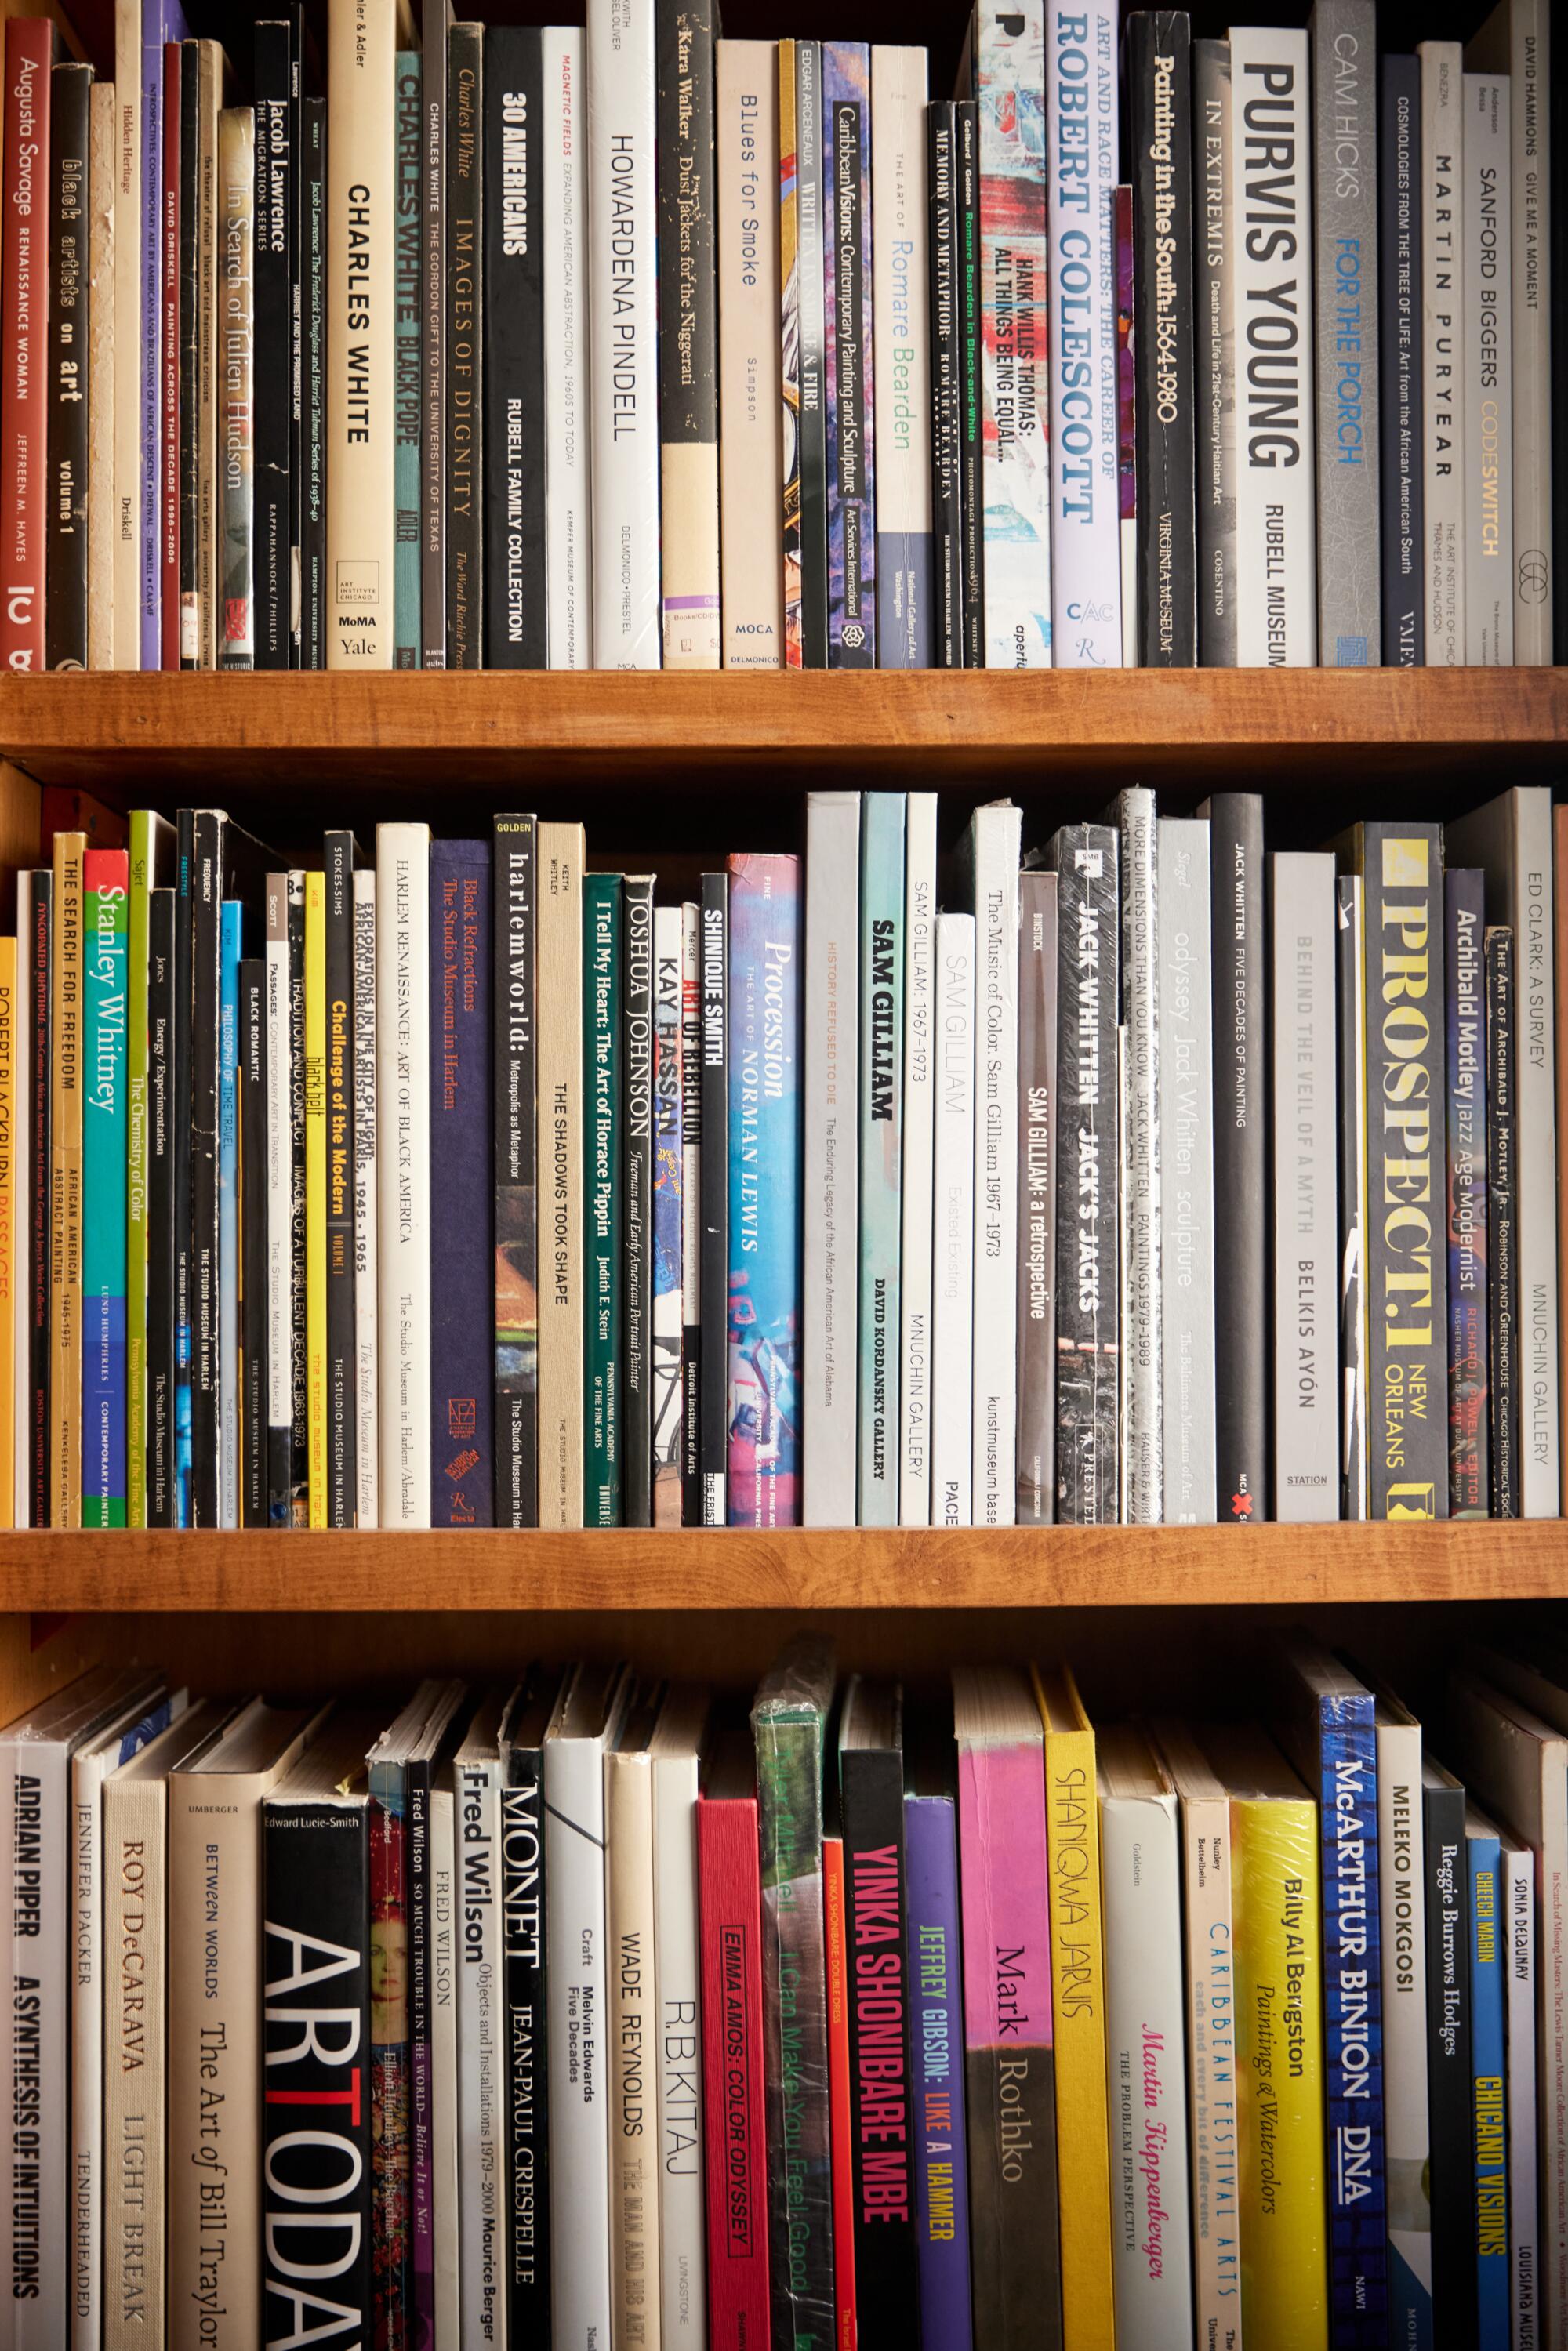 Details of books on a shelf, including several art book on artists like Robert Colescott.